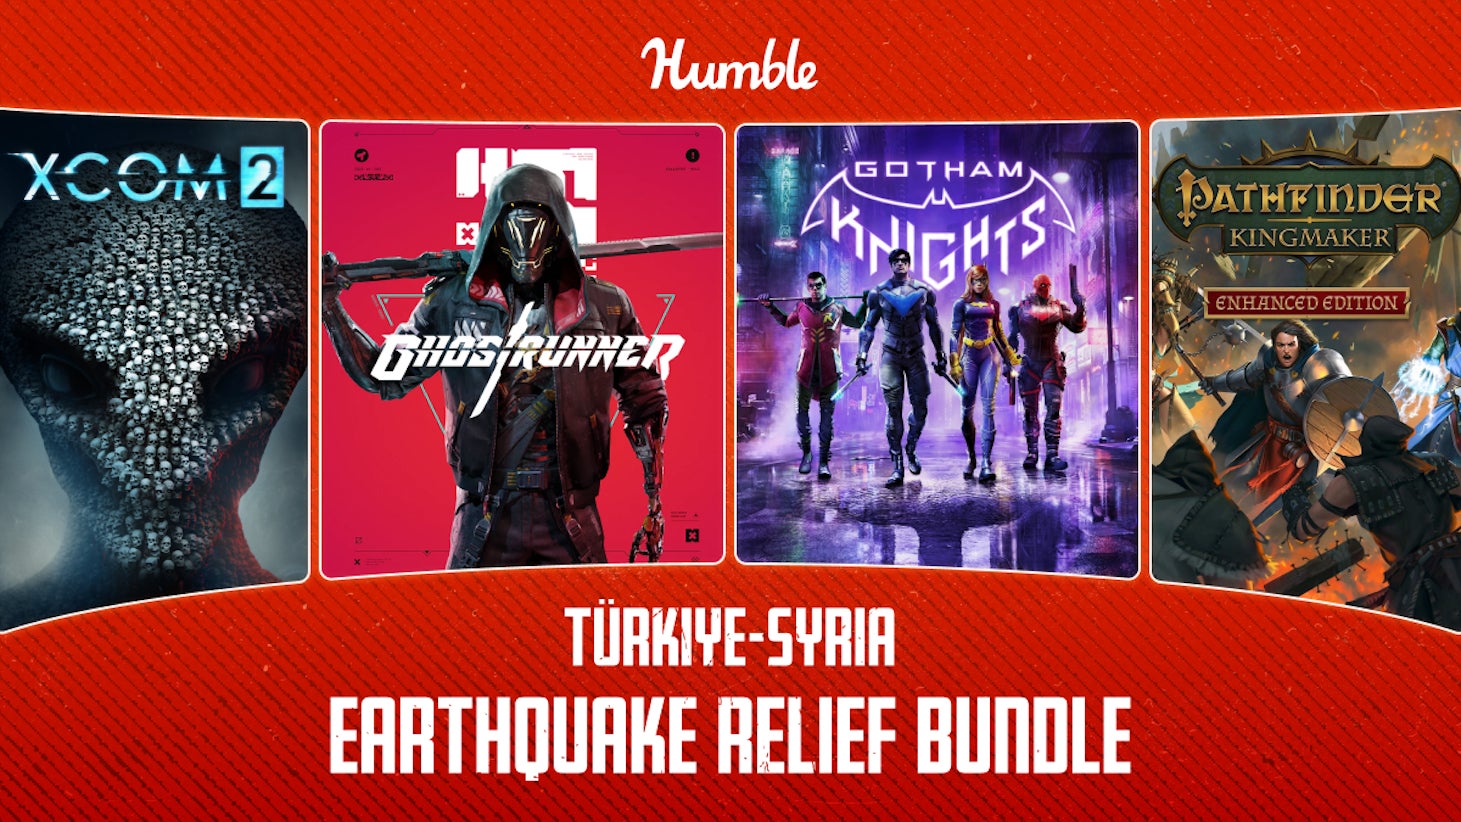 Gotham Knights headlines Humble's Türkiye-Syria Earthquake Relief Bundle |  Rock Paper Shotgun